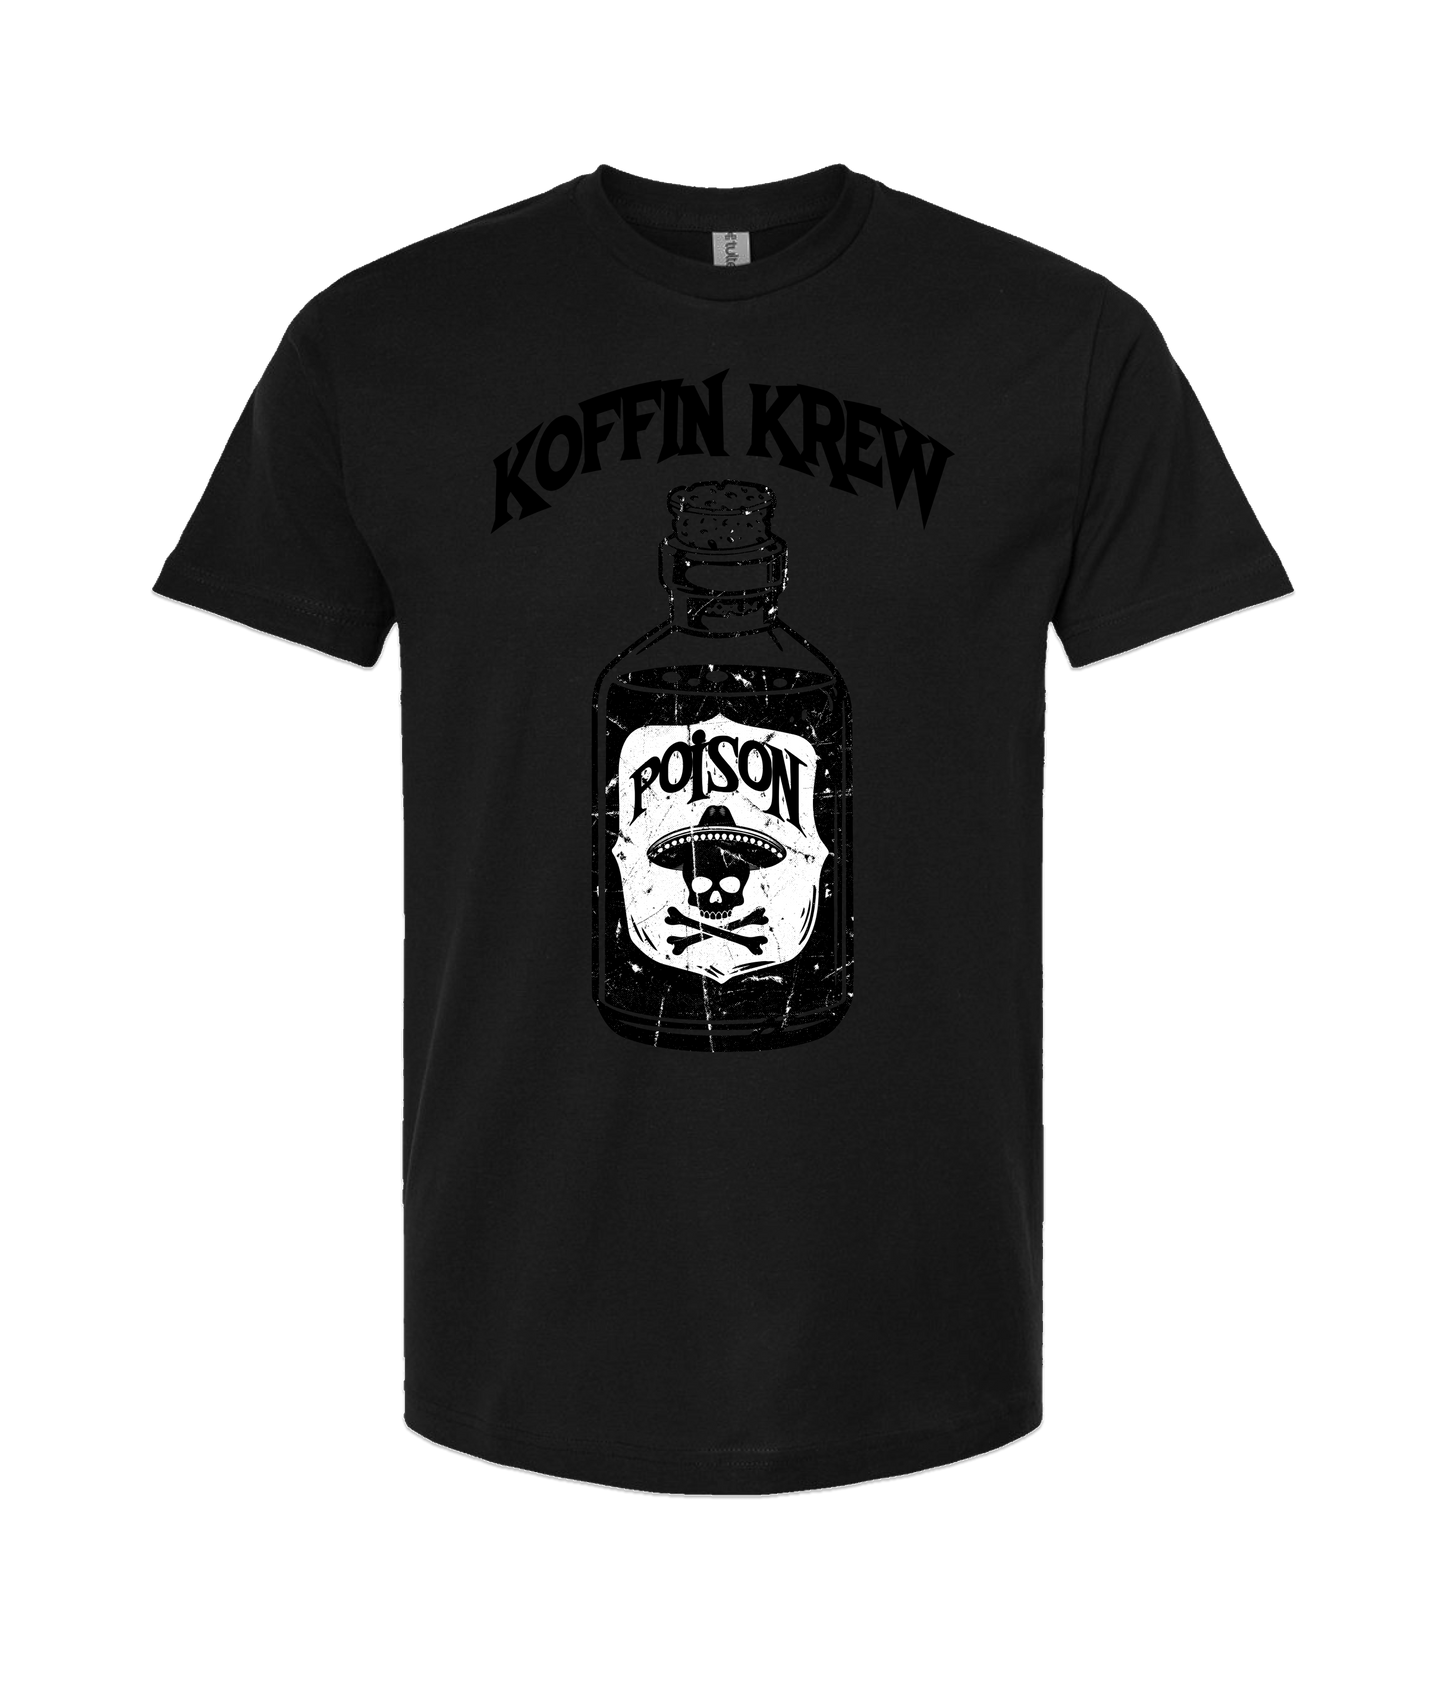 Koffin Krew Apparel - Pick Your Poison - Black T Shirt